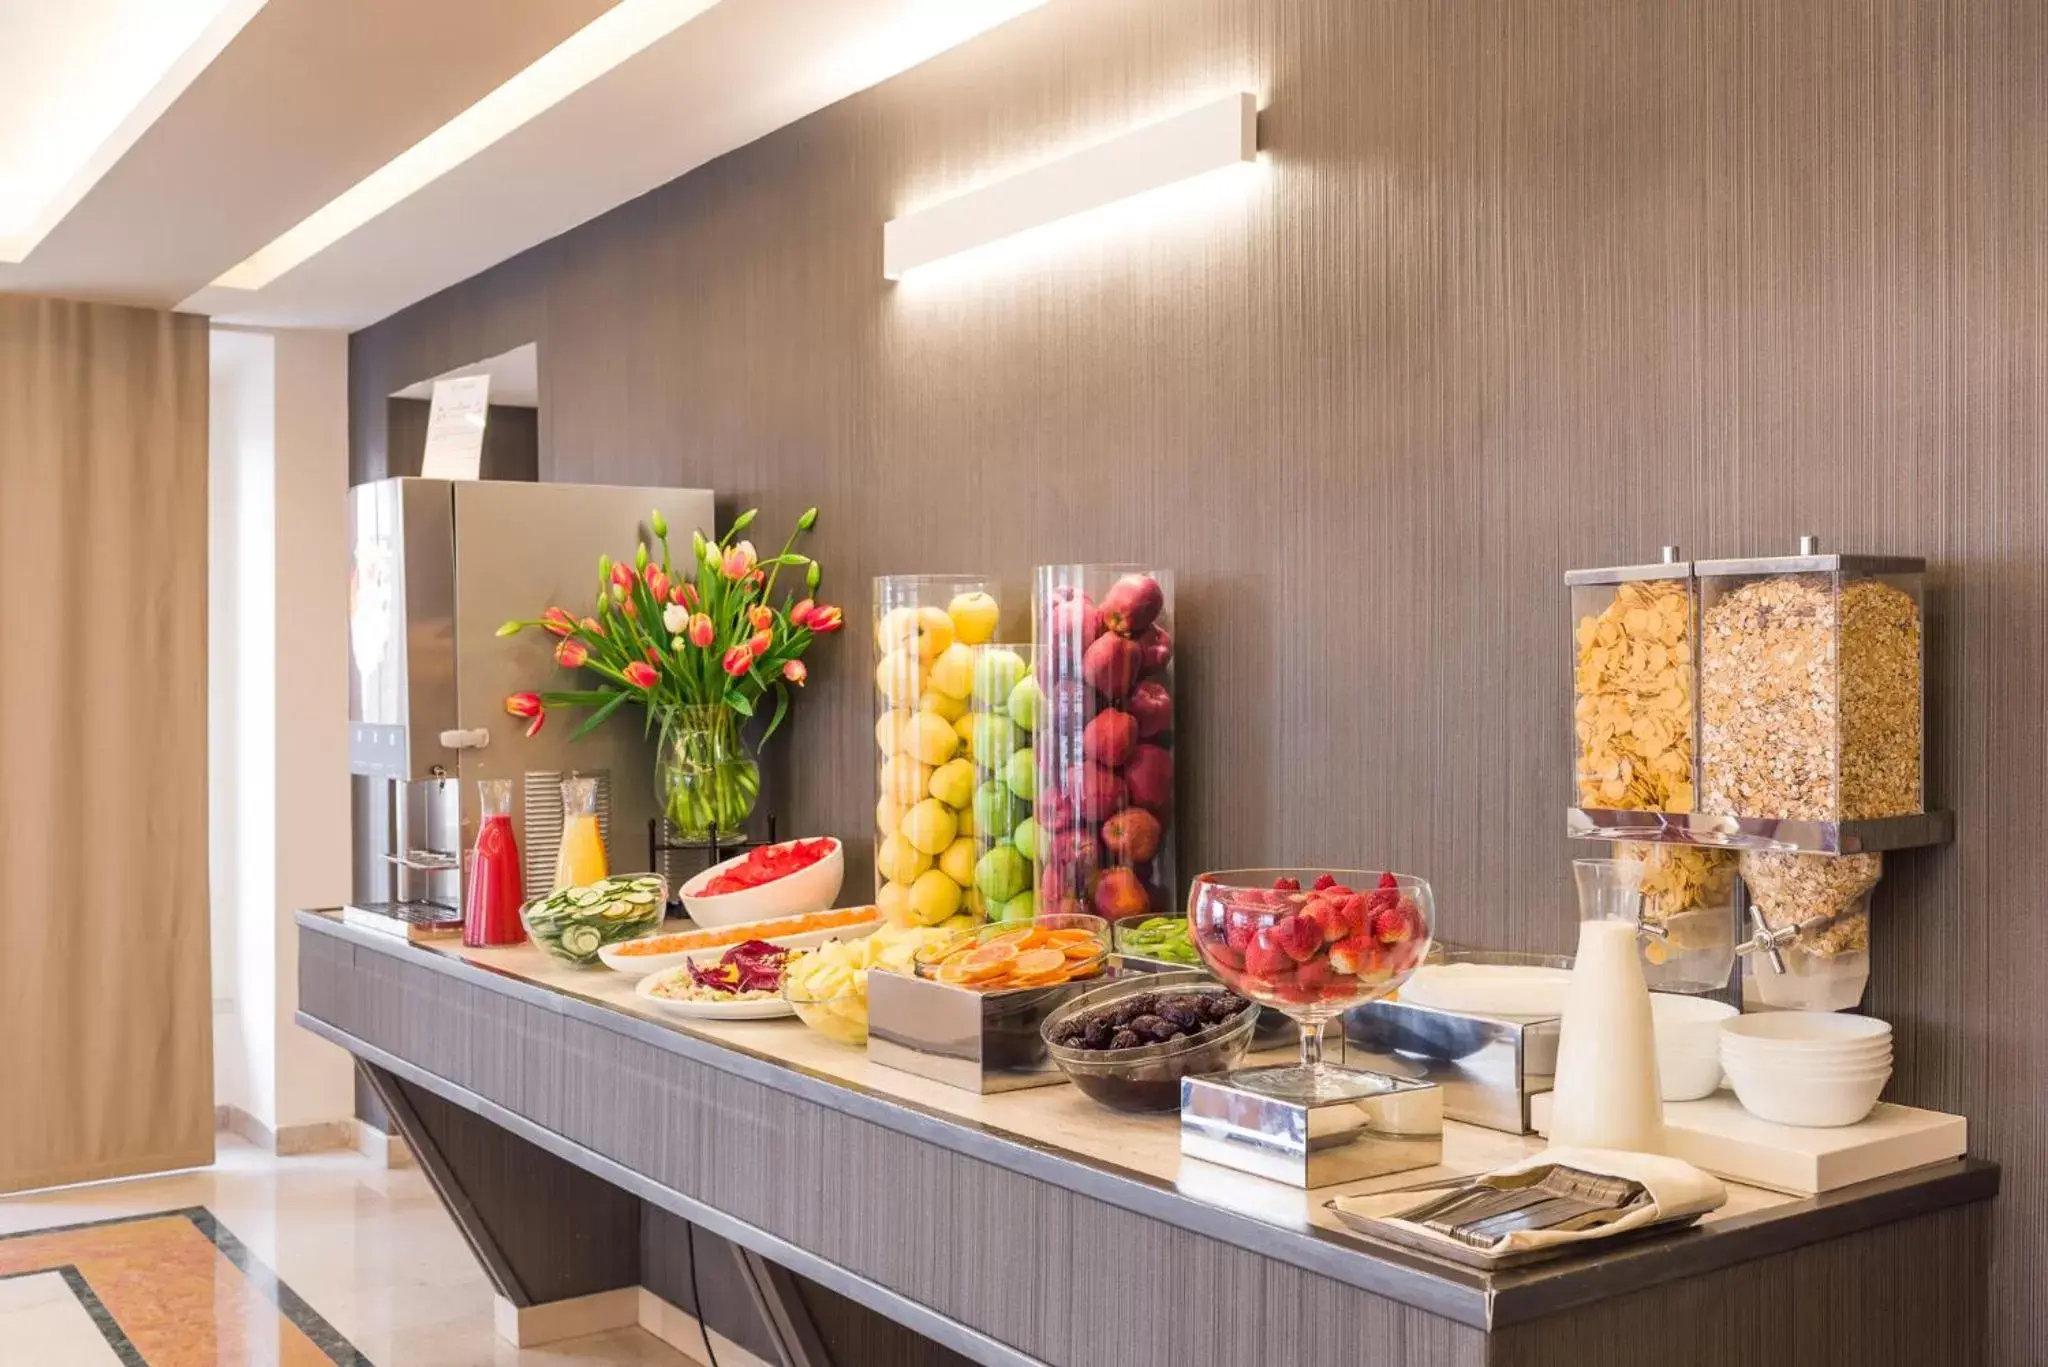 Buffet breakfast in Raeli Hotel Siracusa